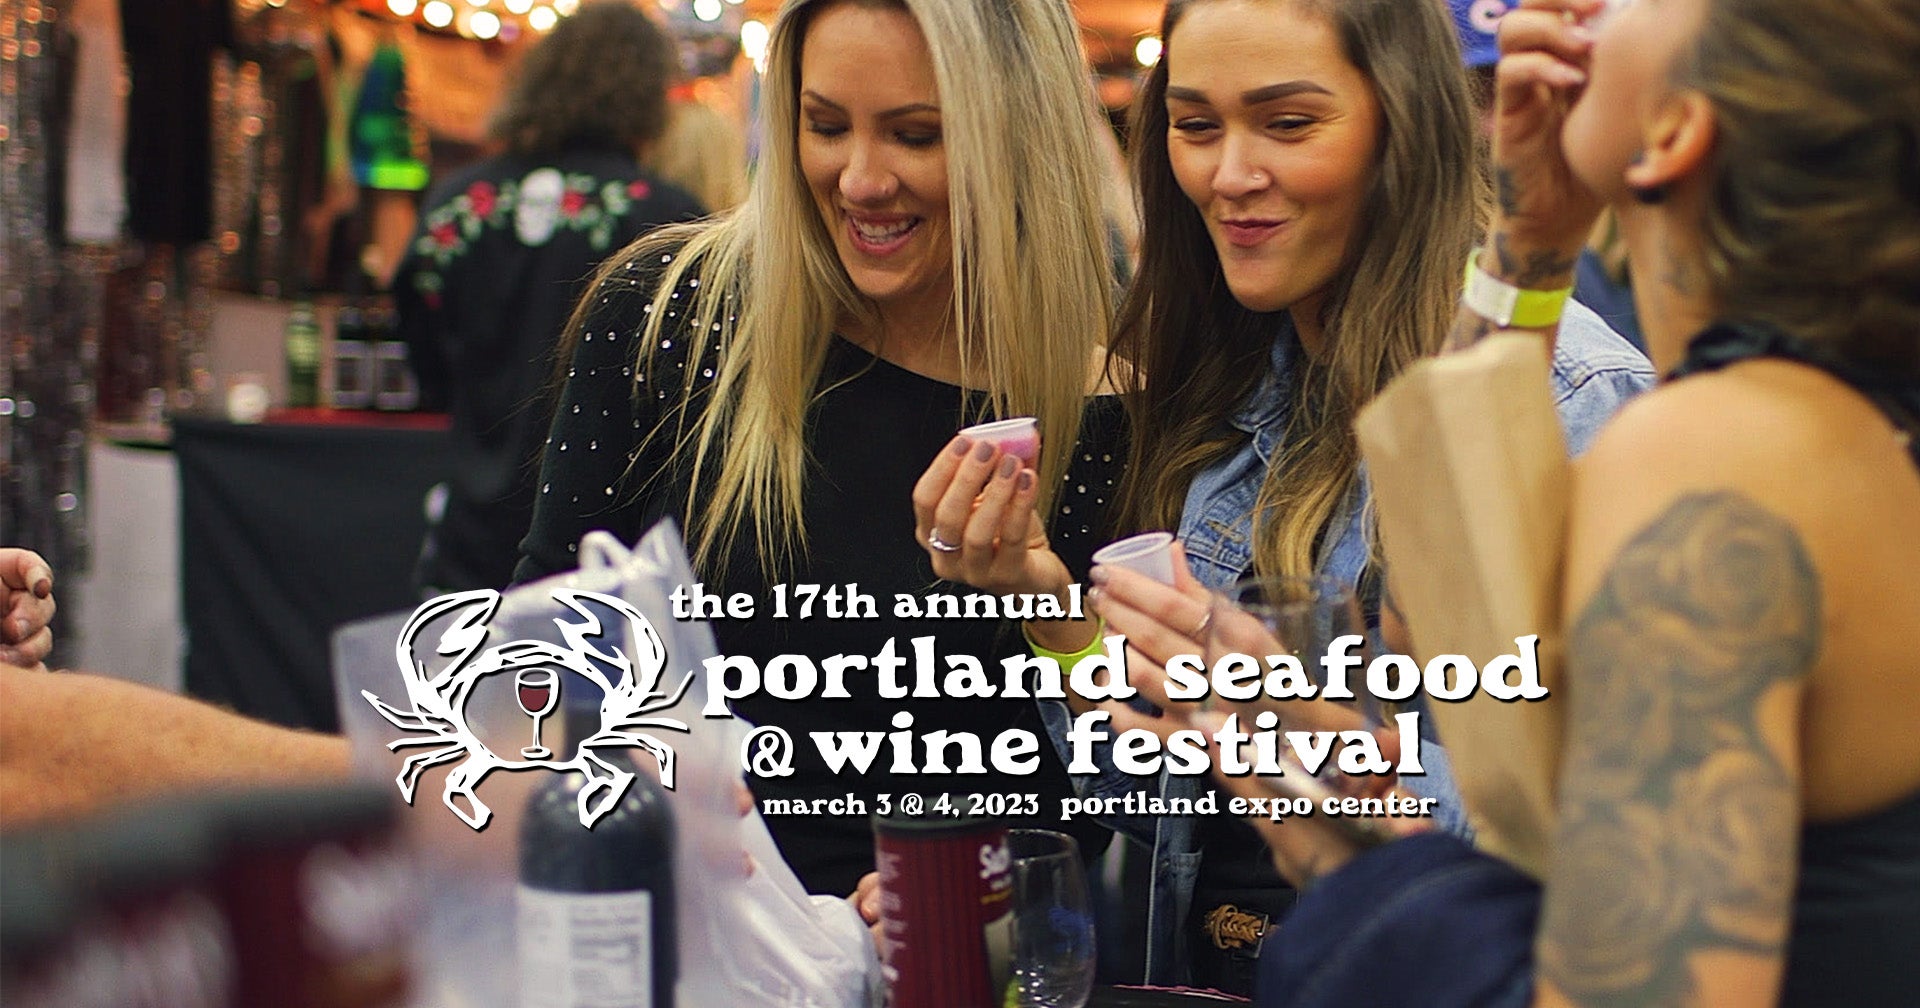 The 17th Annual Portland Seafood & Wine Festival